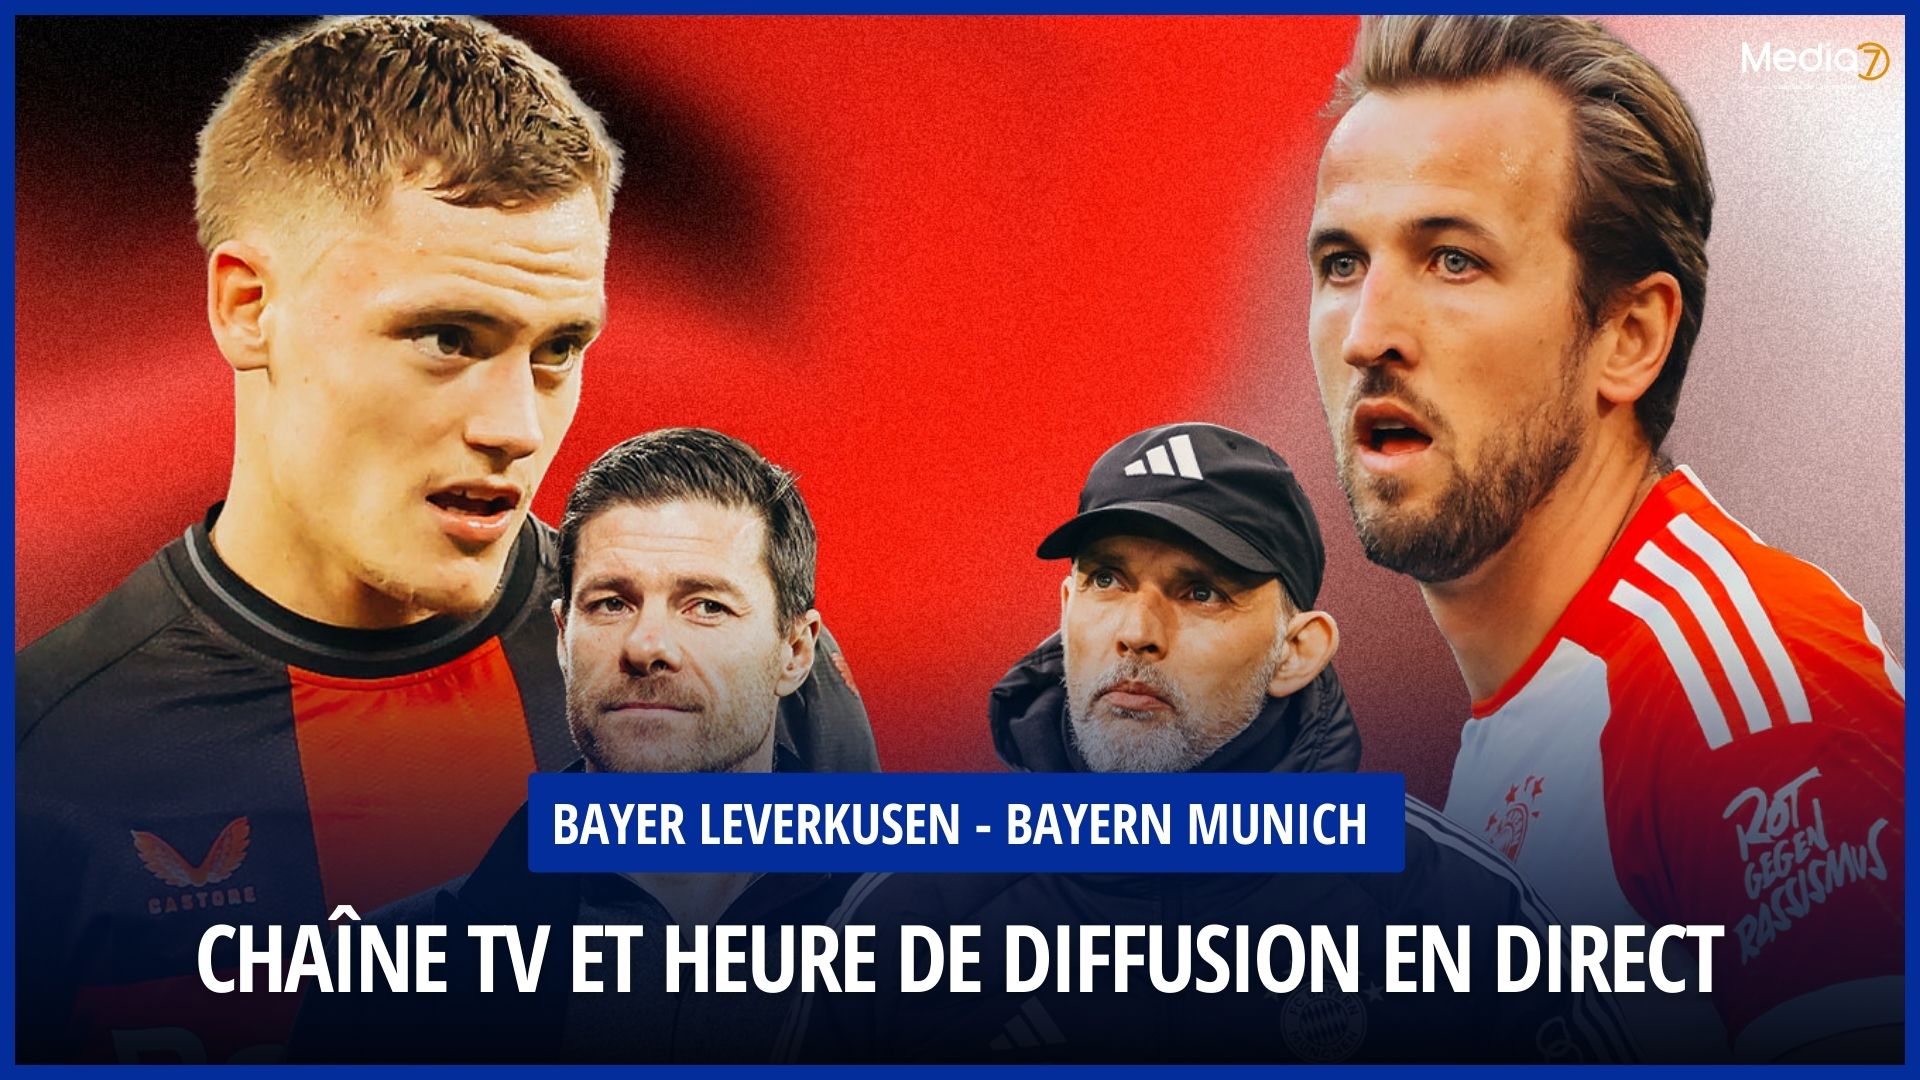 Follow the Bayer Leverkusen - Bayern Munich Match Live: Schedules and Broadcast TV & Streaming - Media7